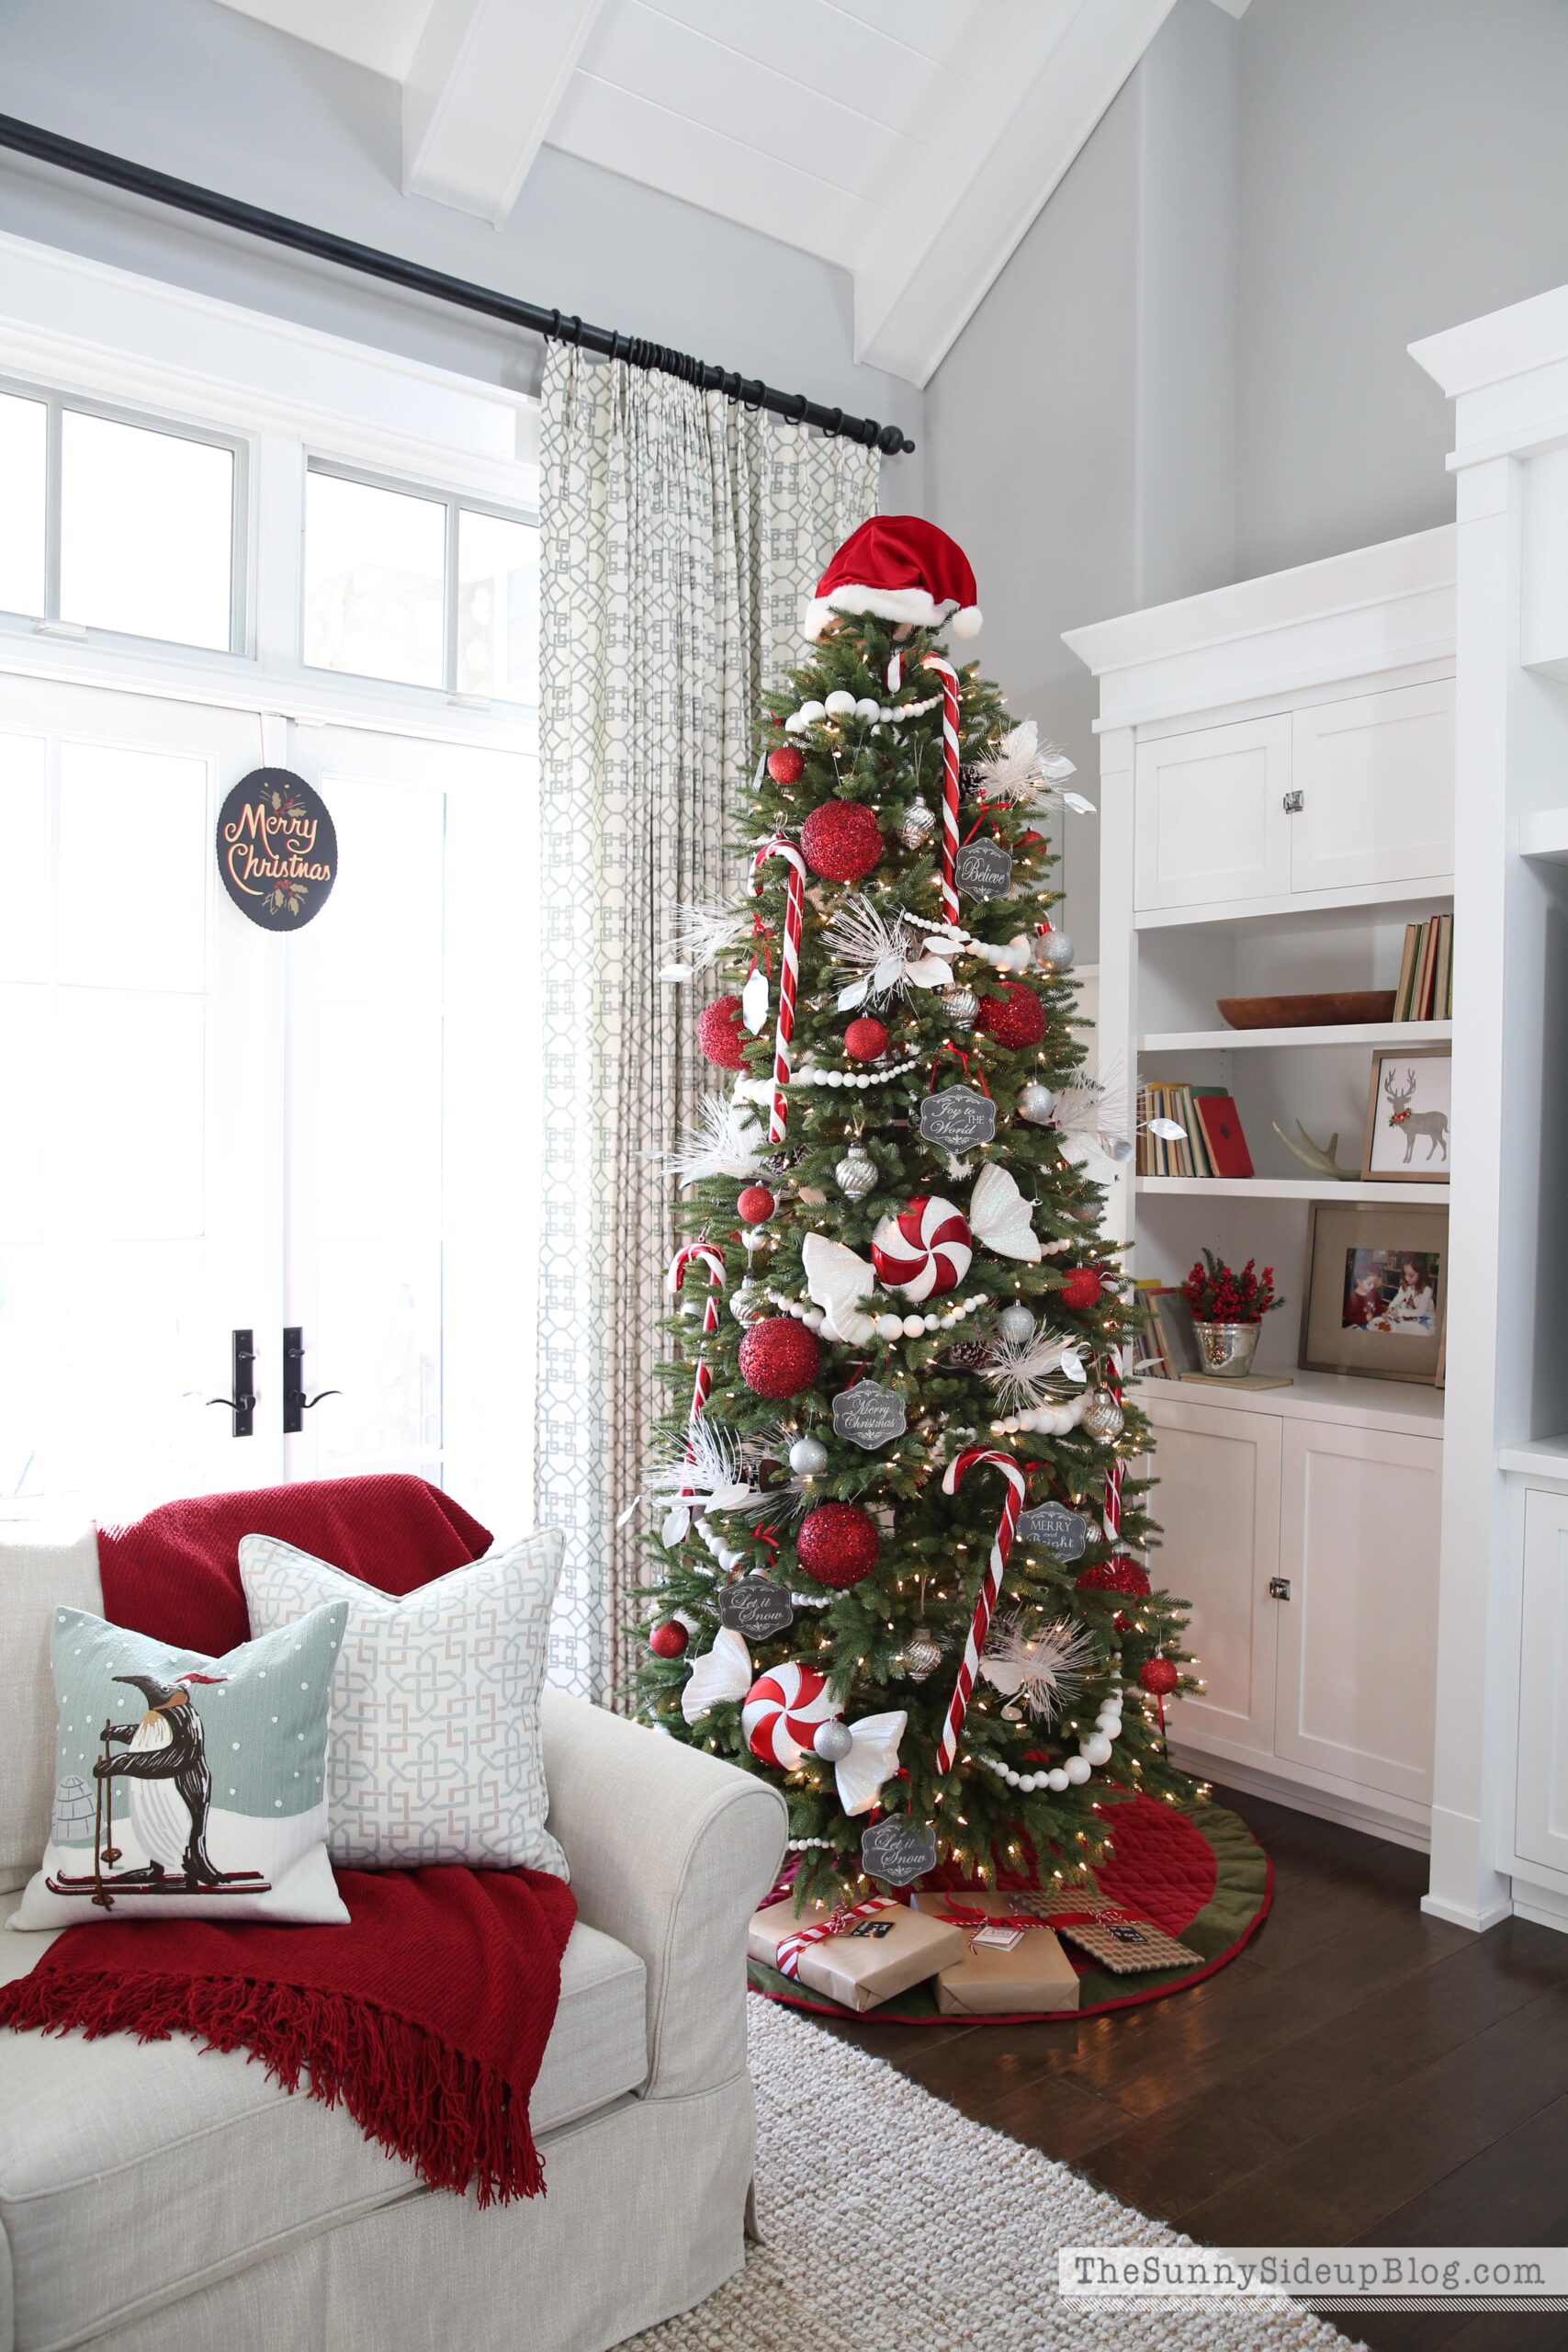 https://www.thesunnysideupblog.com/wp-content/uploads/2015/11/red-silver-white-christmas-tree-scaled.jpg